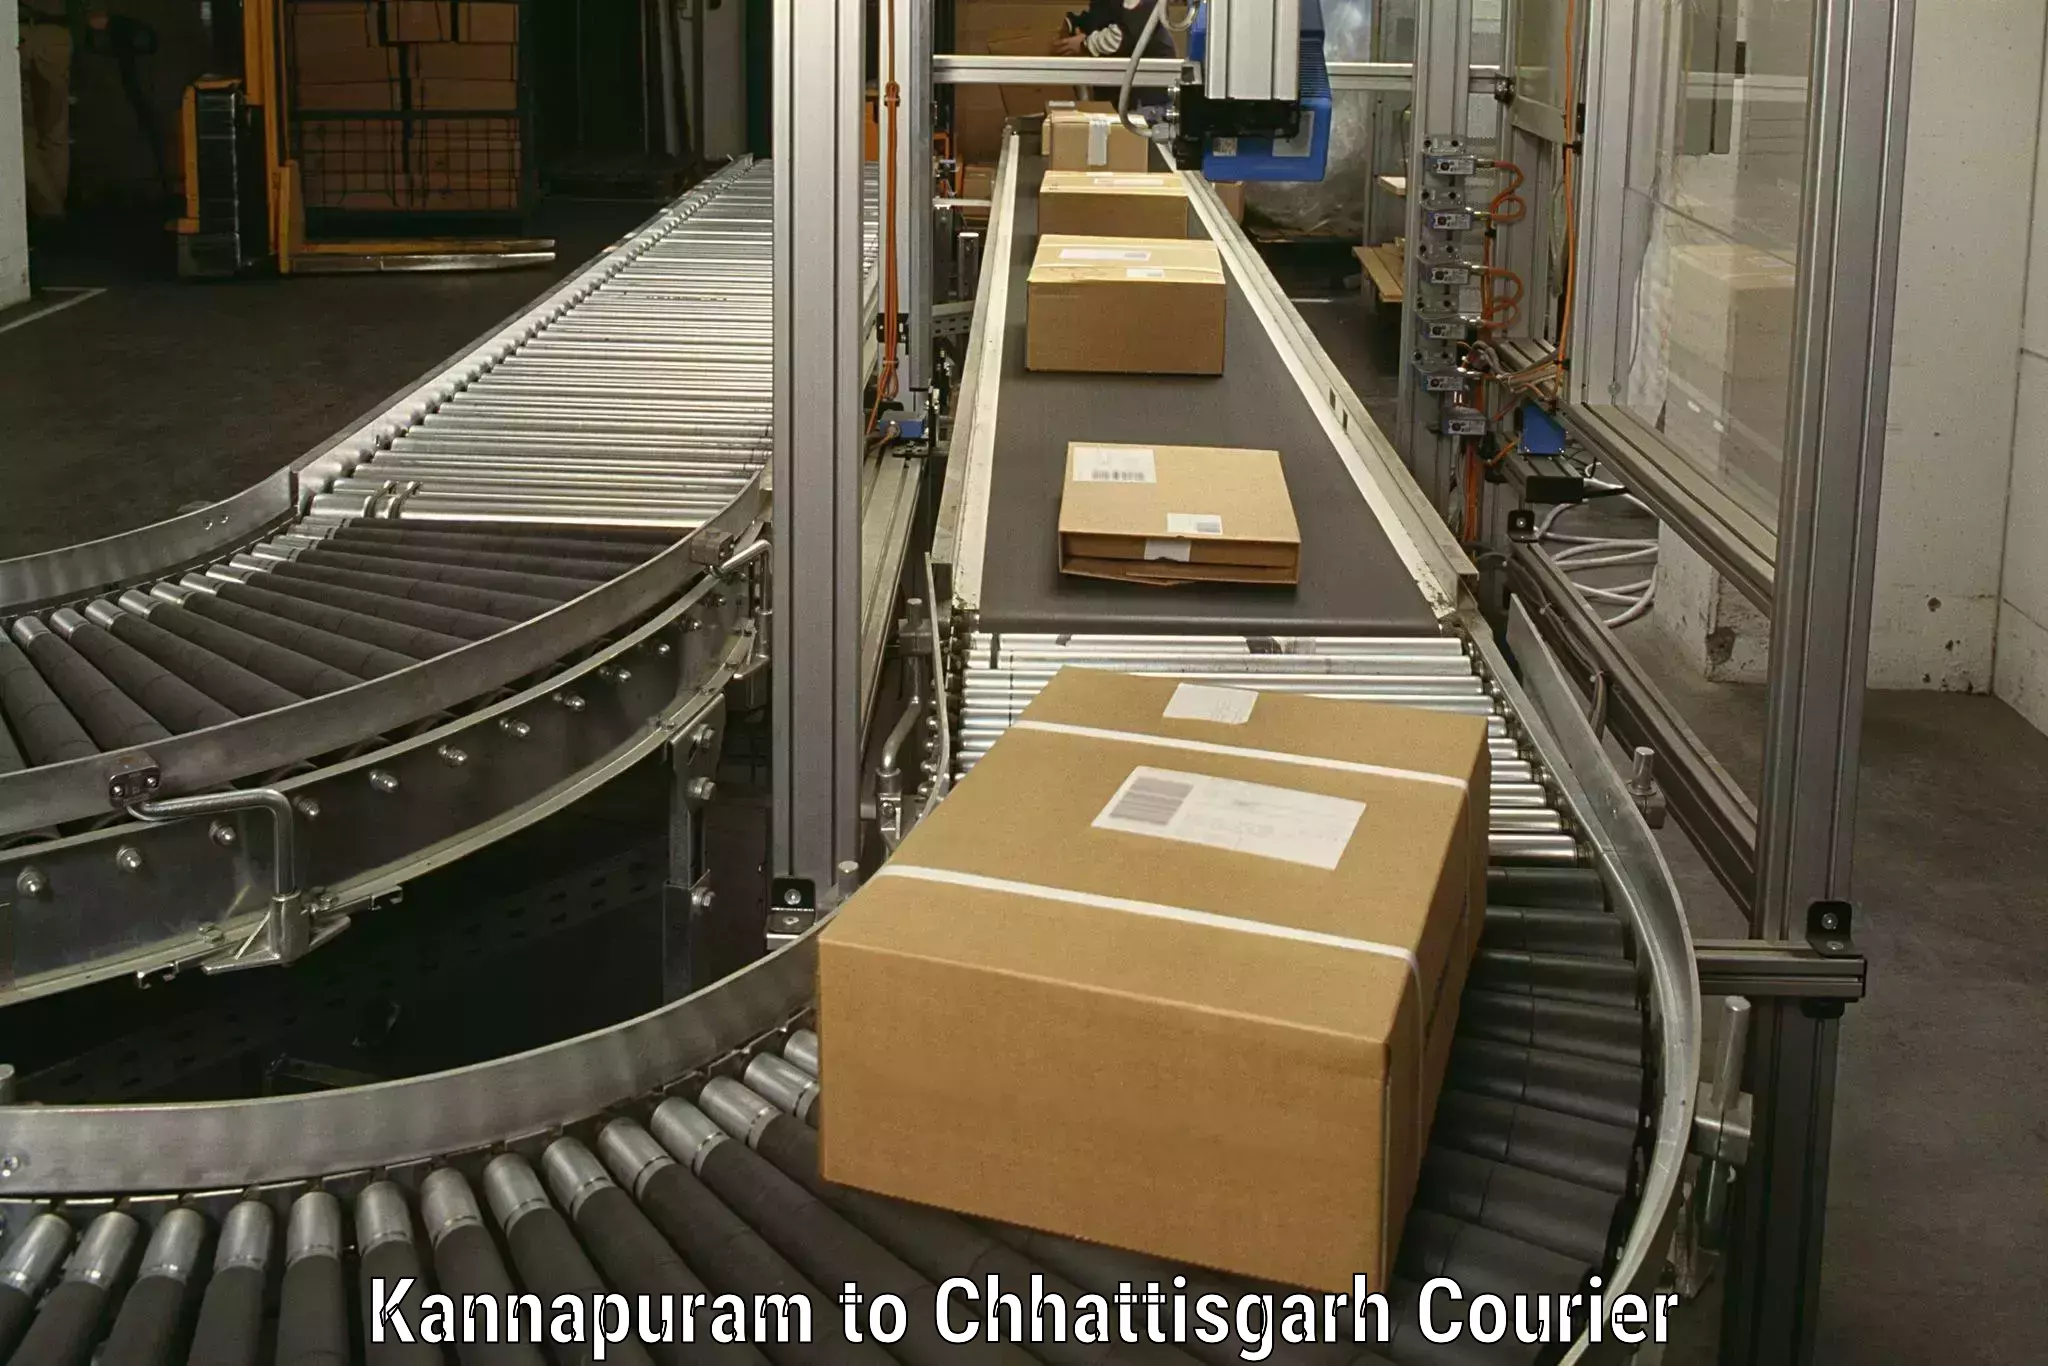 Furniture delivery service Kannapuram to Kondagaon